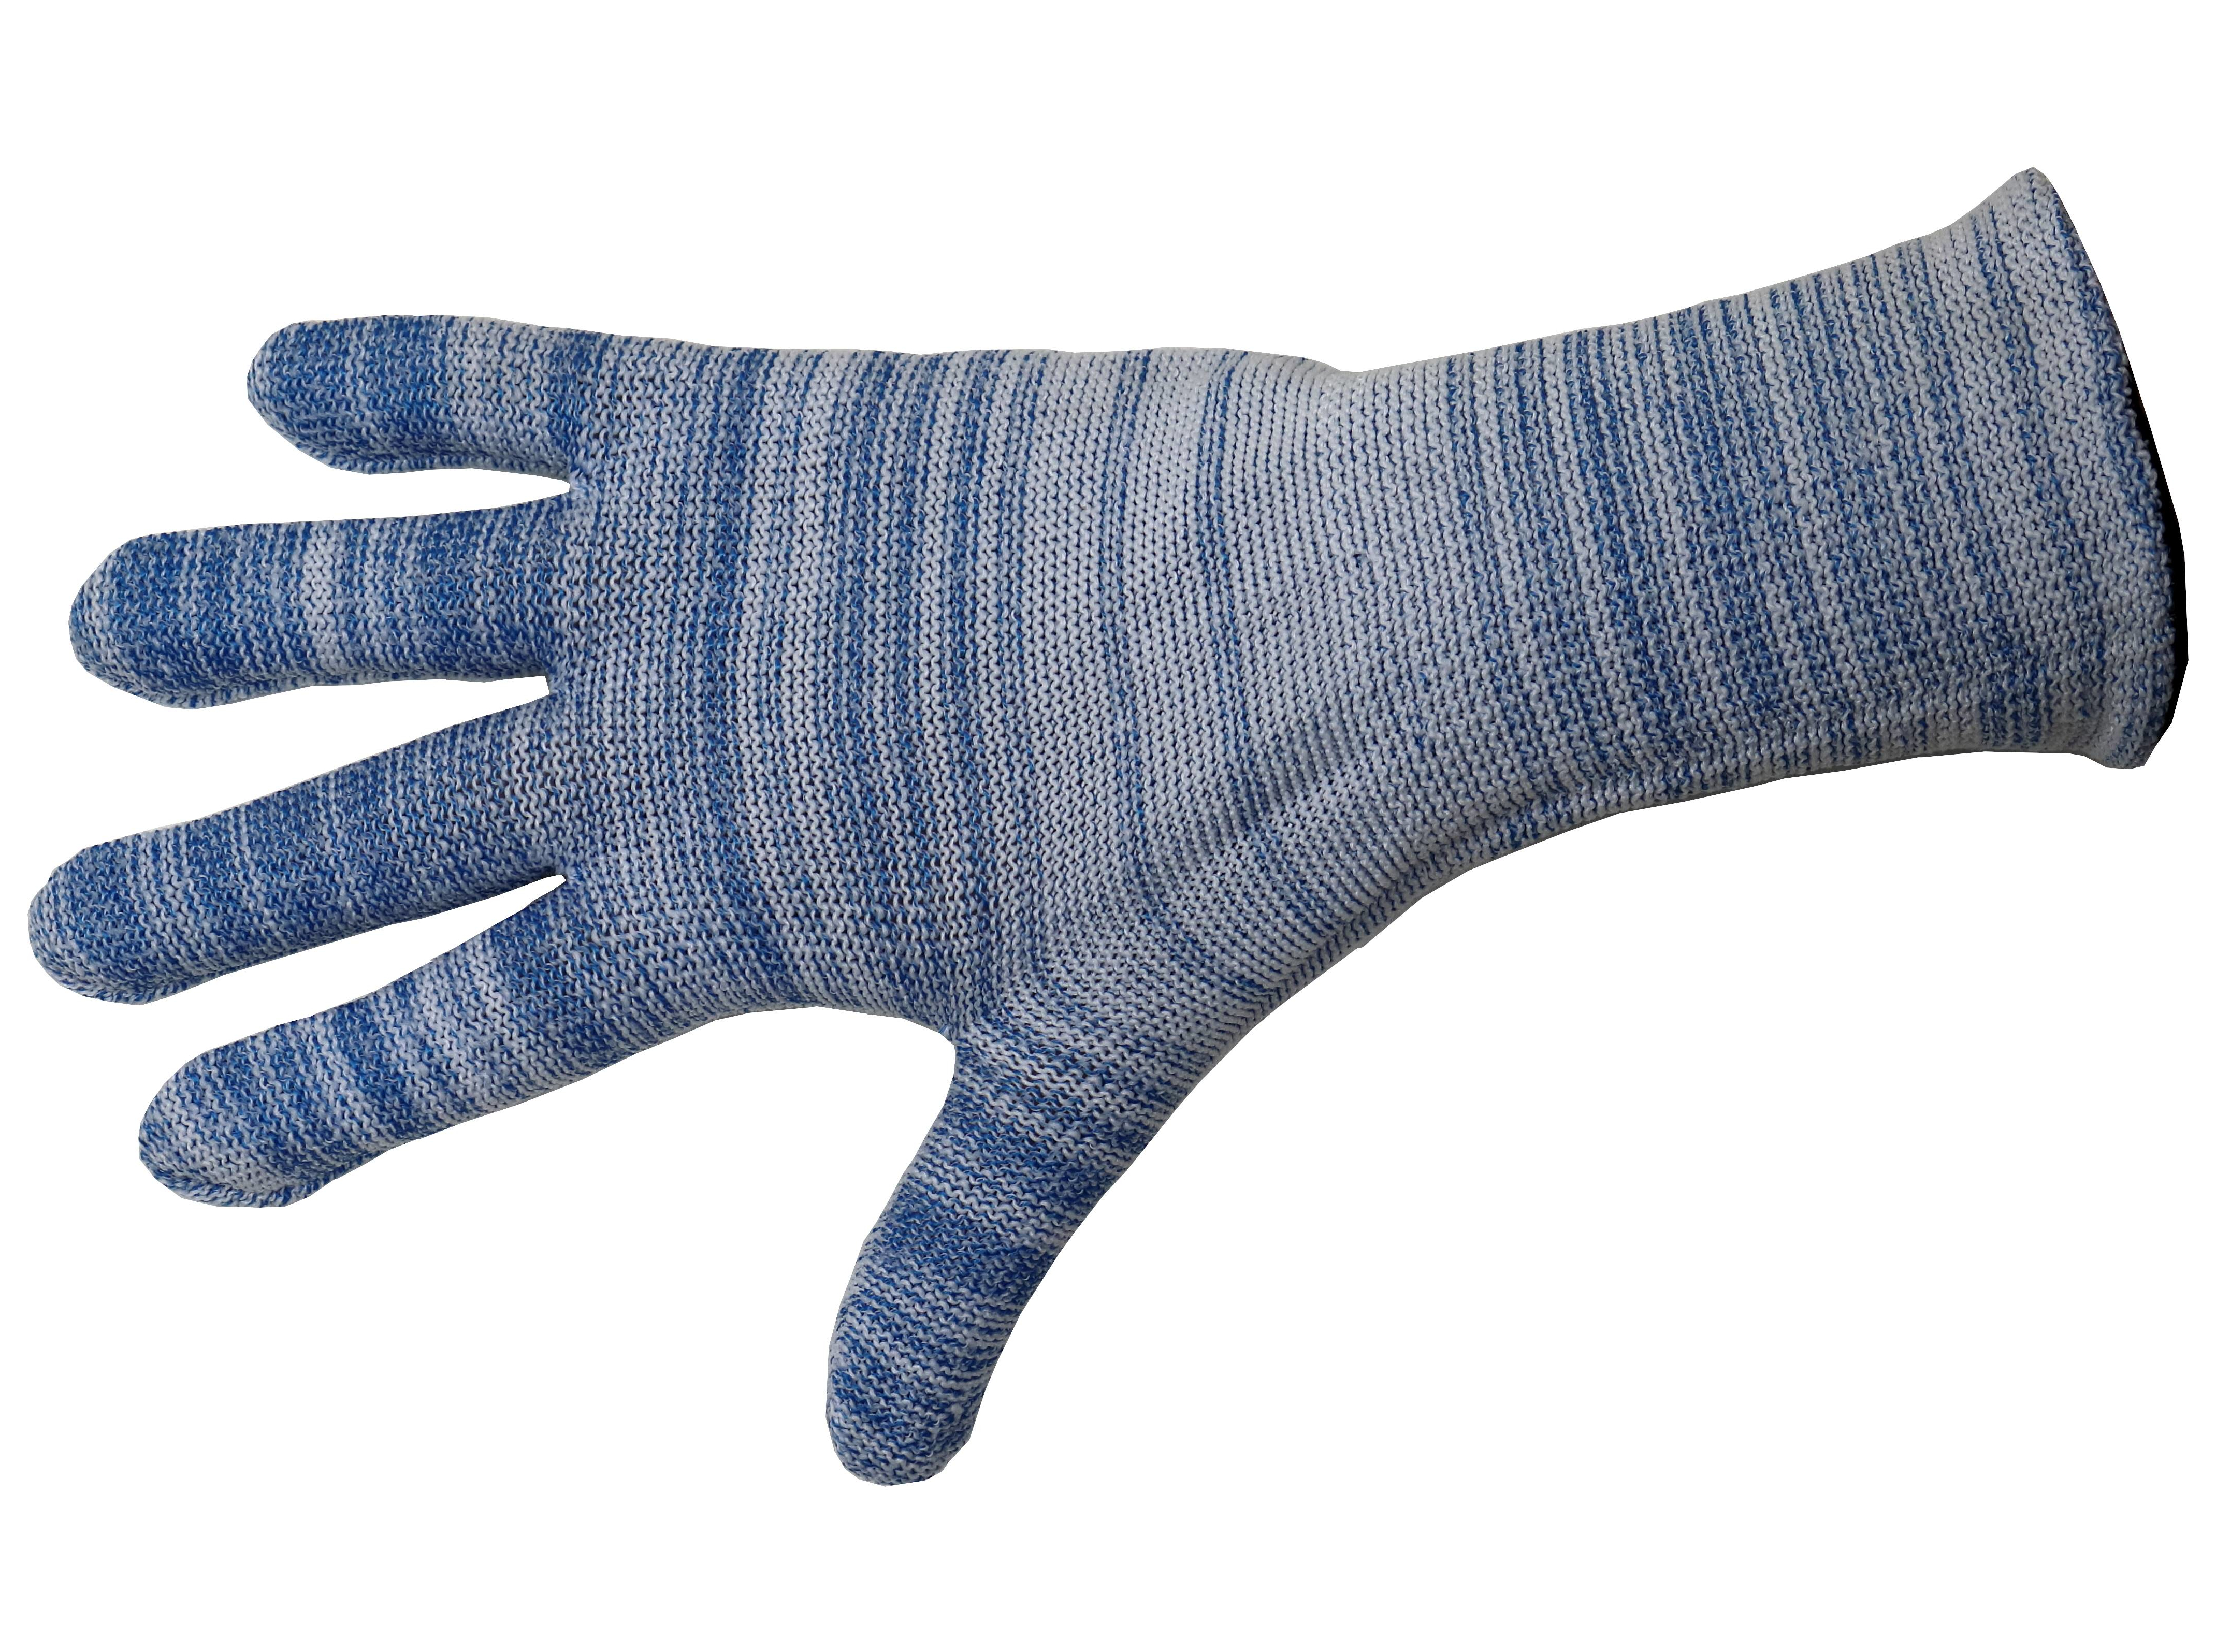 Blue Rhino Flex 72-6110 cut resistant glove